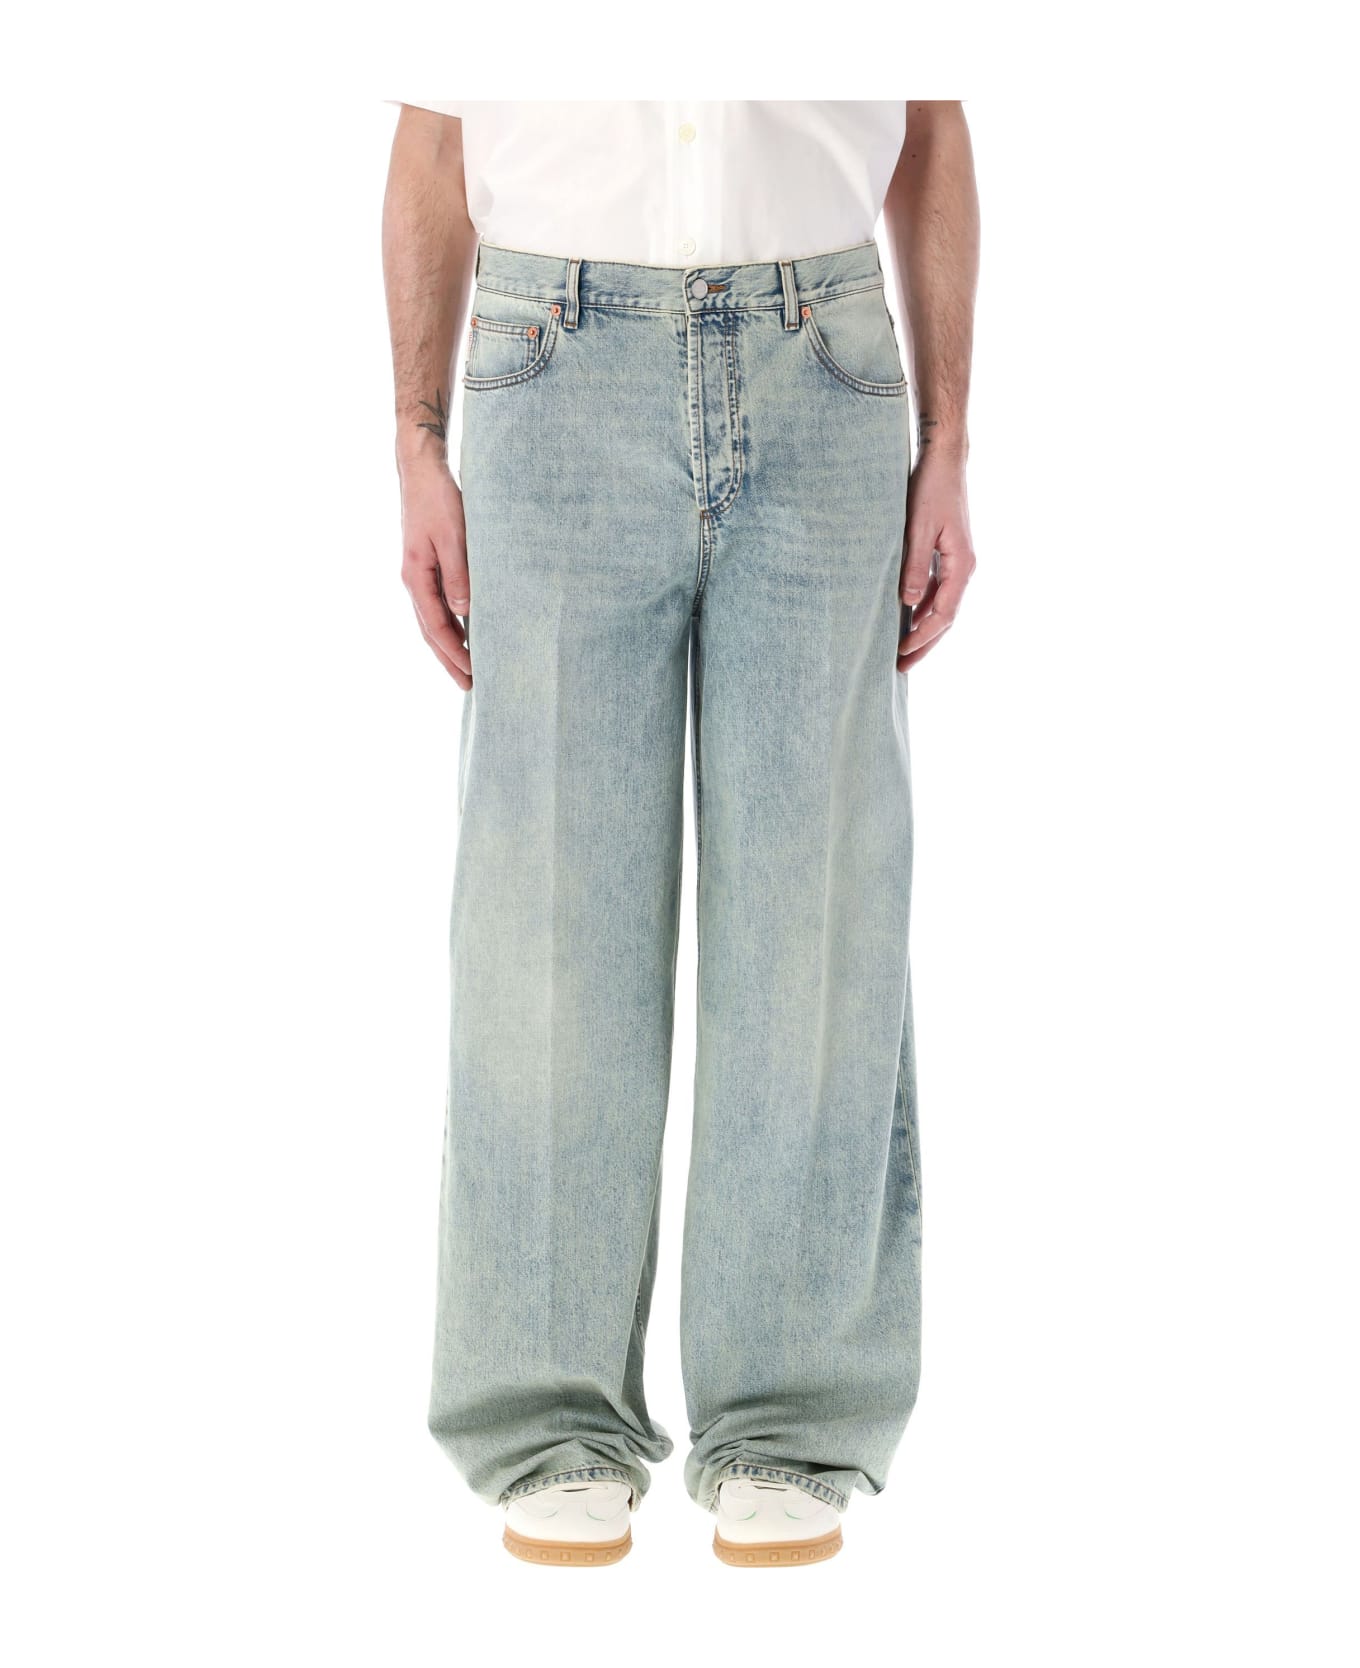 Valentino Always Garavani Oversized Denim Jeans - LIGH BLUE